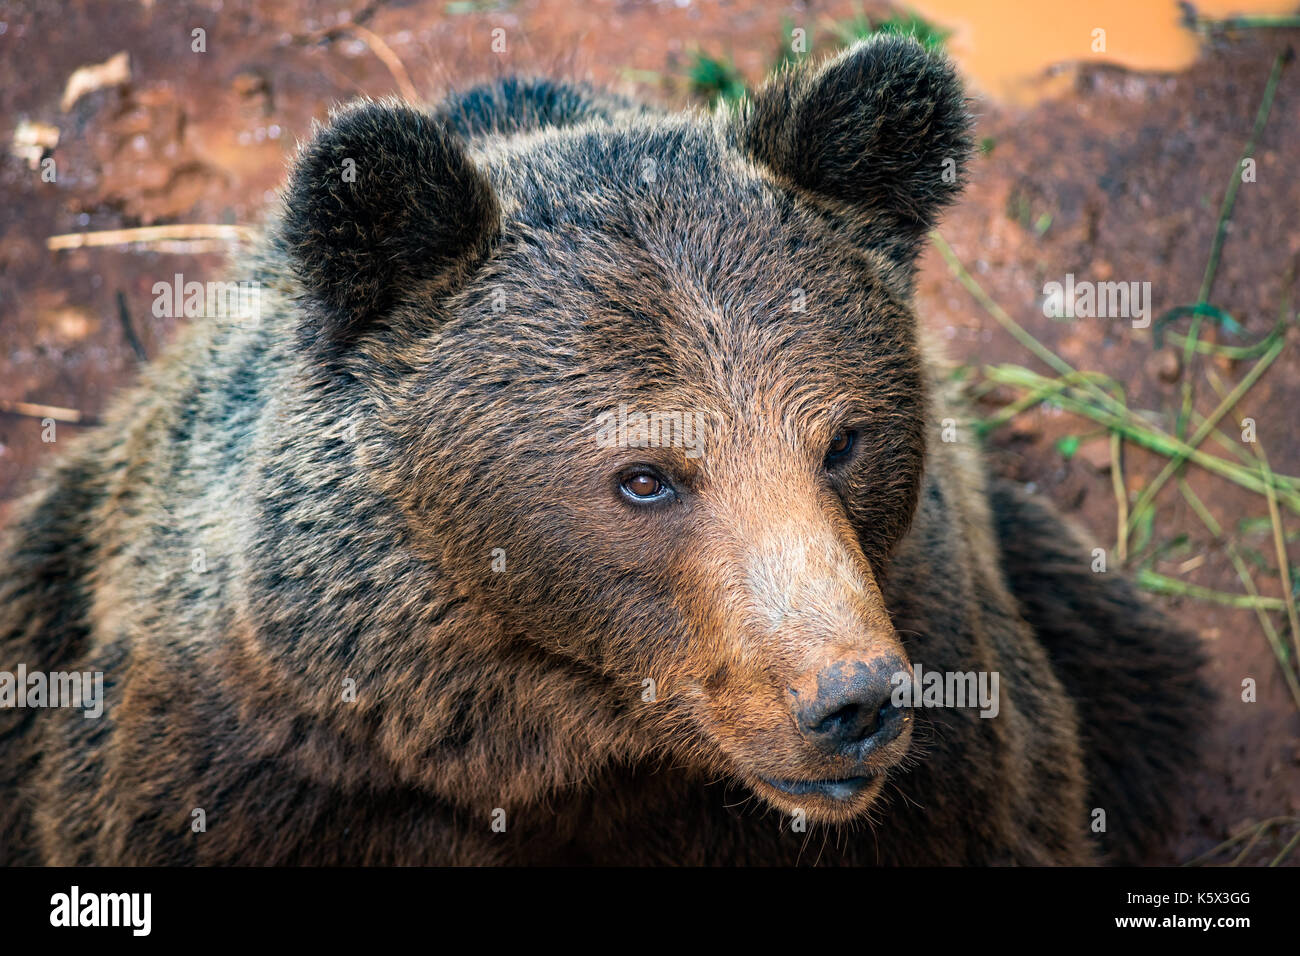 Ursus arctos (Brown bear) portrait in Cabarceno Natural Park, Cantabria, Spain. Stock Photo